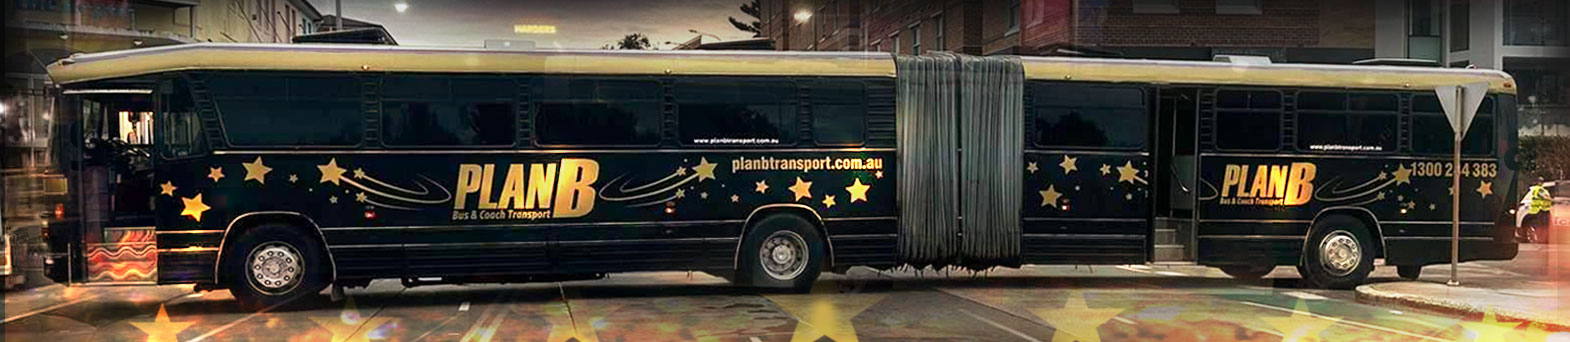 Sydney Bus Hire, Bus Hire Sydney, School Bus Hire Sydney